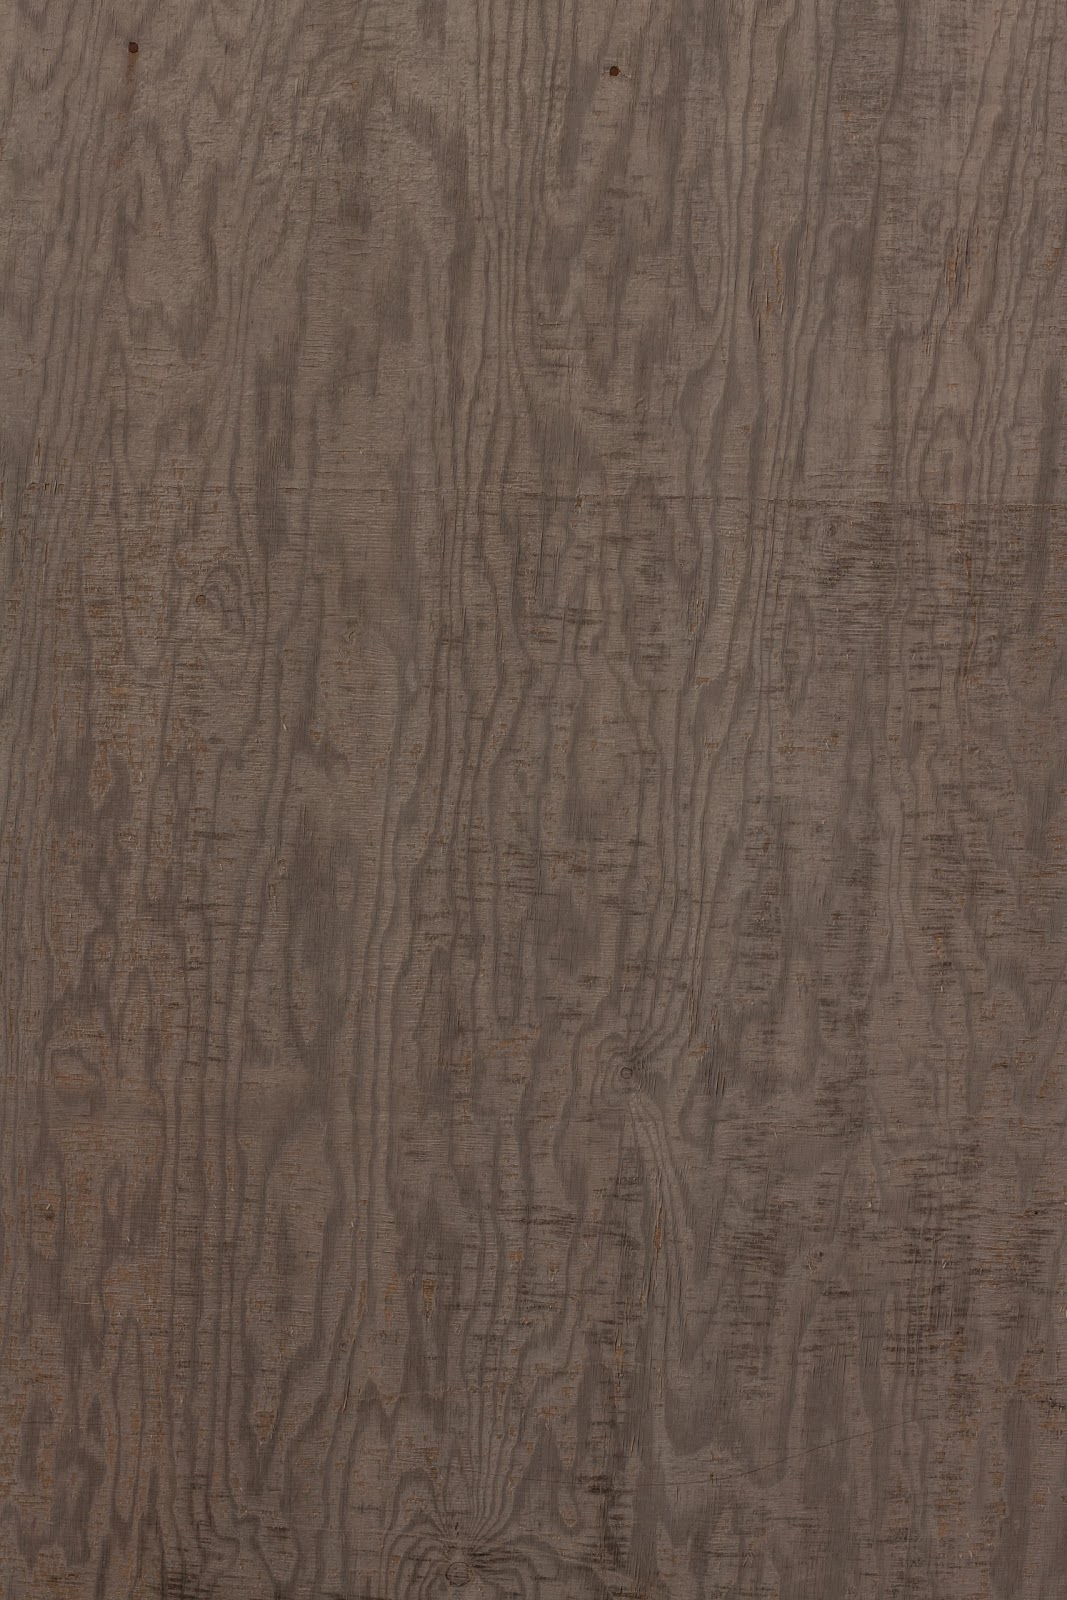 Long wooden board texture 3168x4752